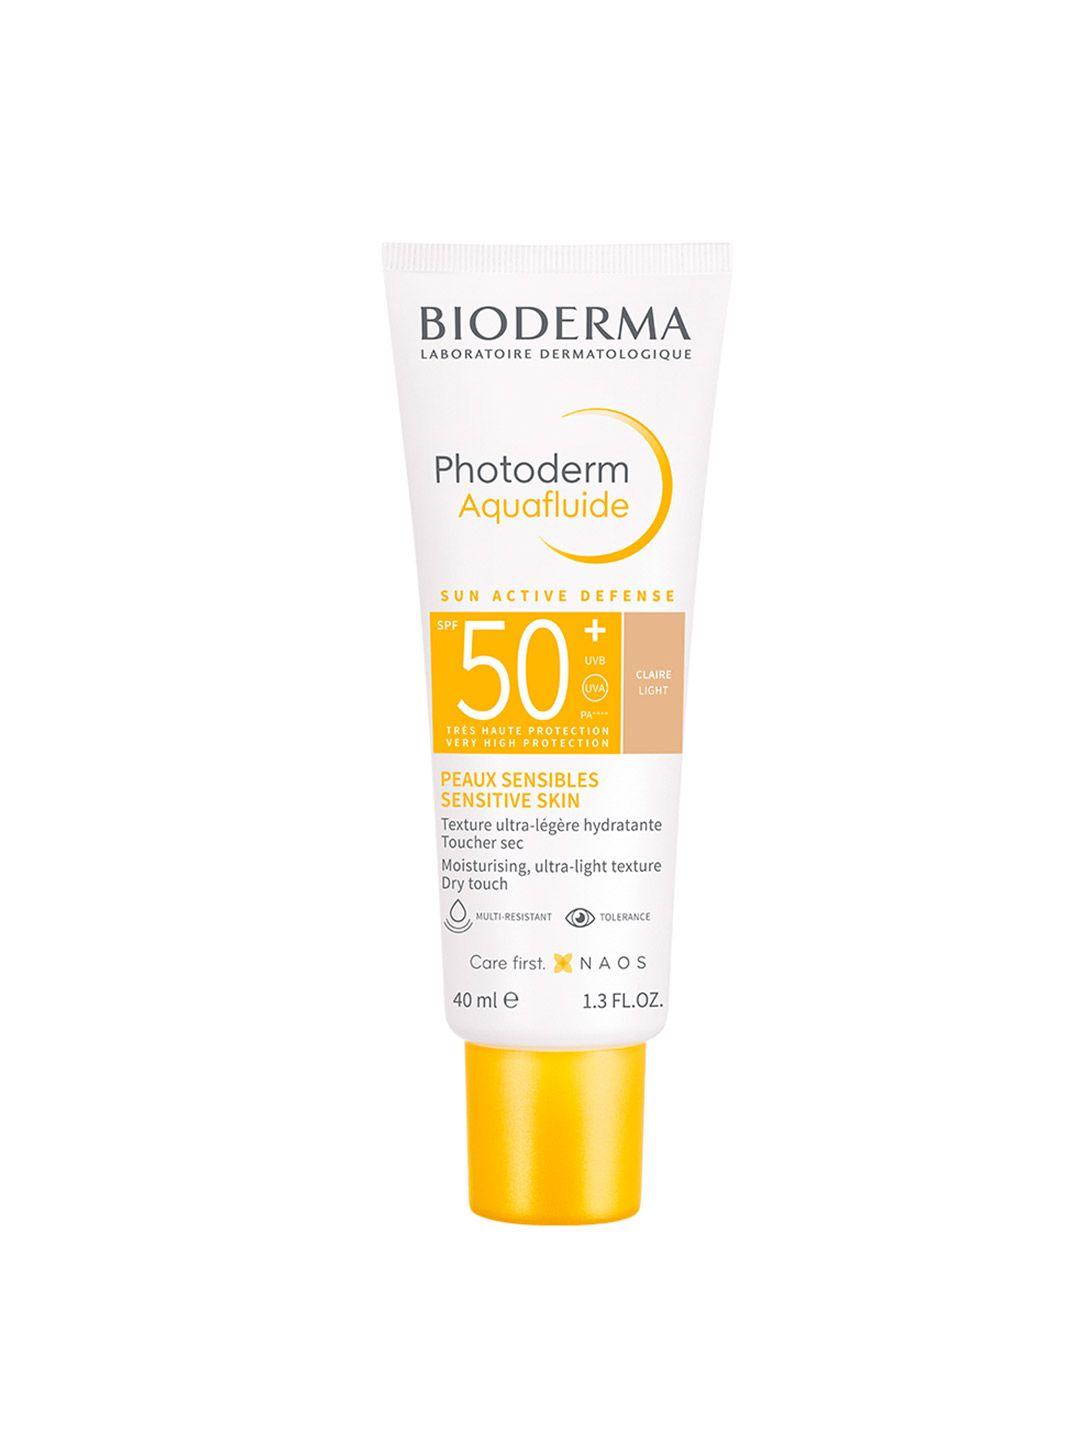 BIODERMA Photoderm Max Aquafluide Light Shade Sunscreen SPF 50+ - 40ml